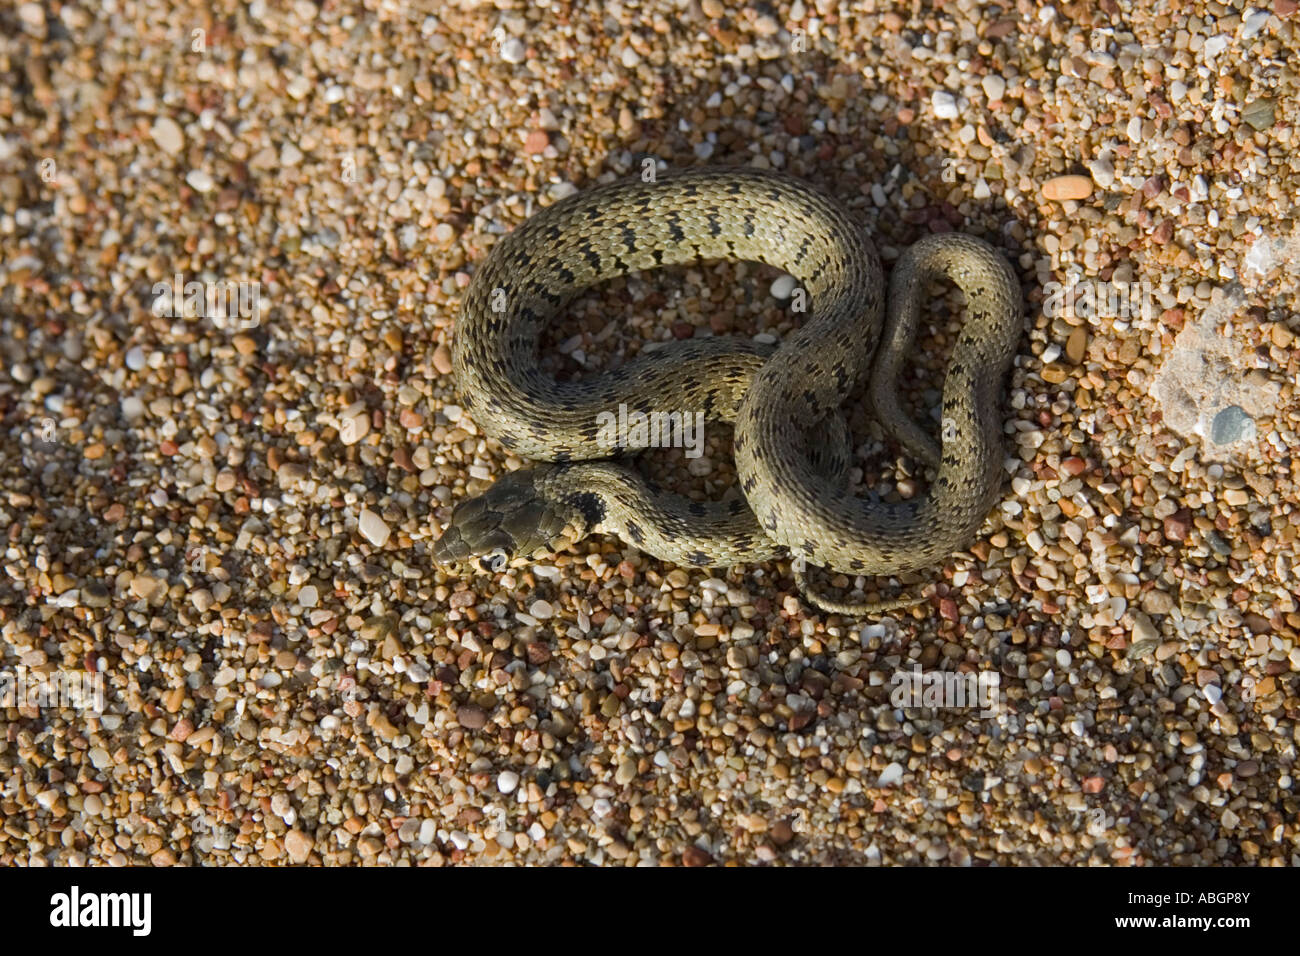 Young Ringed Snake on sand, Greece Natrix natrix Stock Photo